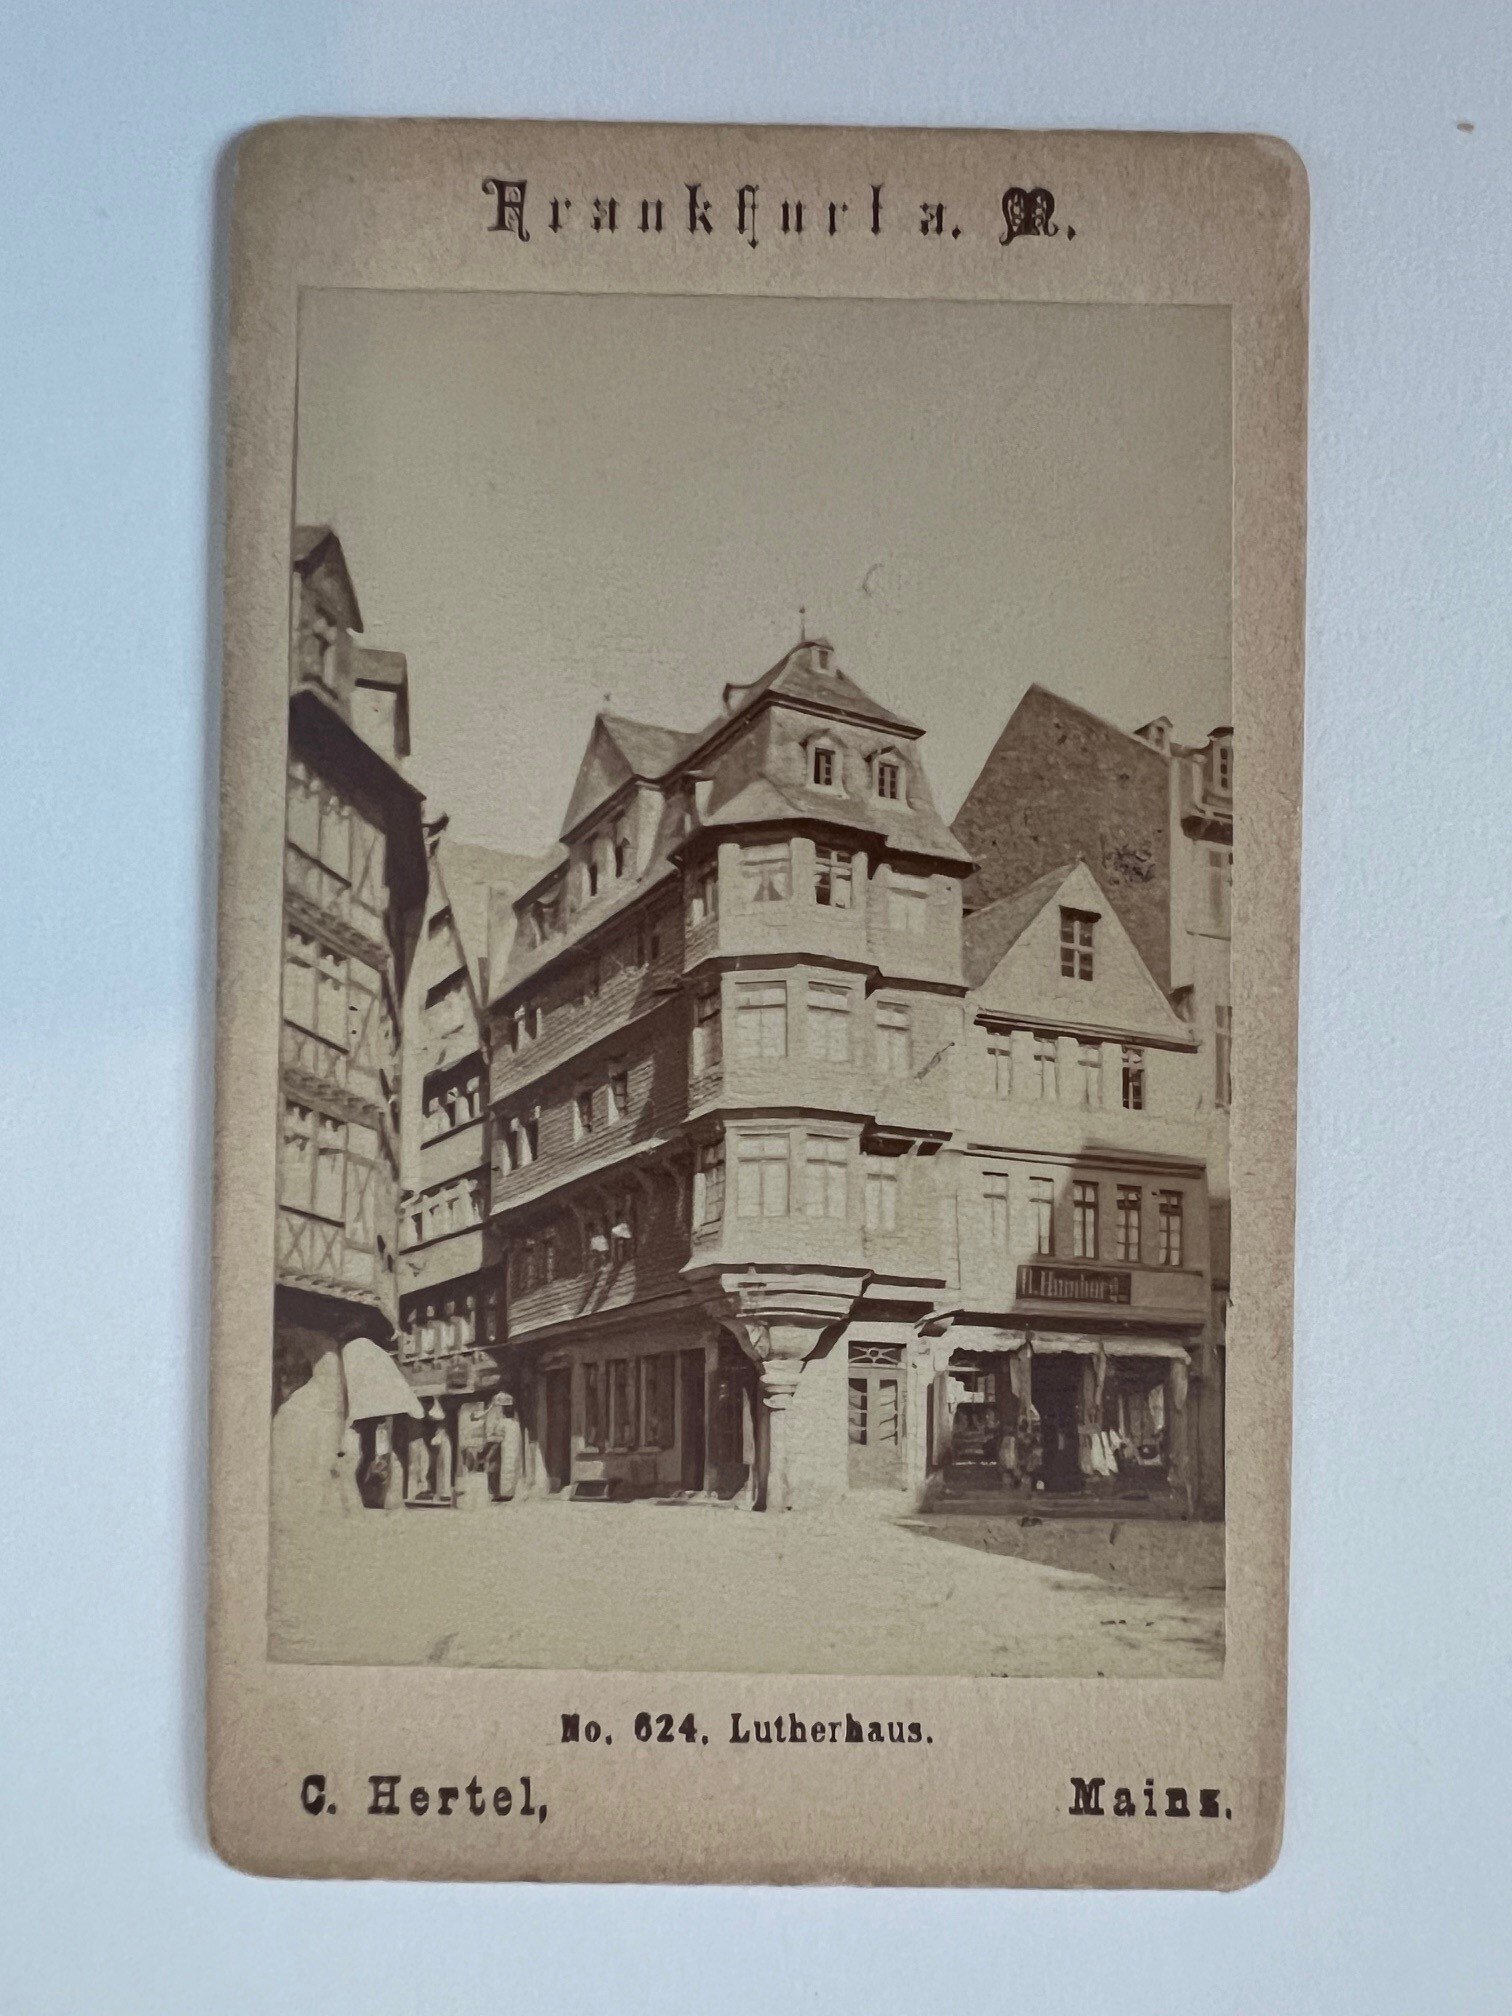 CdV, Carl Hertel, Frankfurt, Nr. 624, Lutherhaus, ca. 1886. (Taunus-Rhein-Main - Regionalgeschichtliche Sammlung Dr. Stefan Naas CC BY-NC-SA)